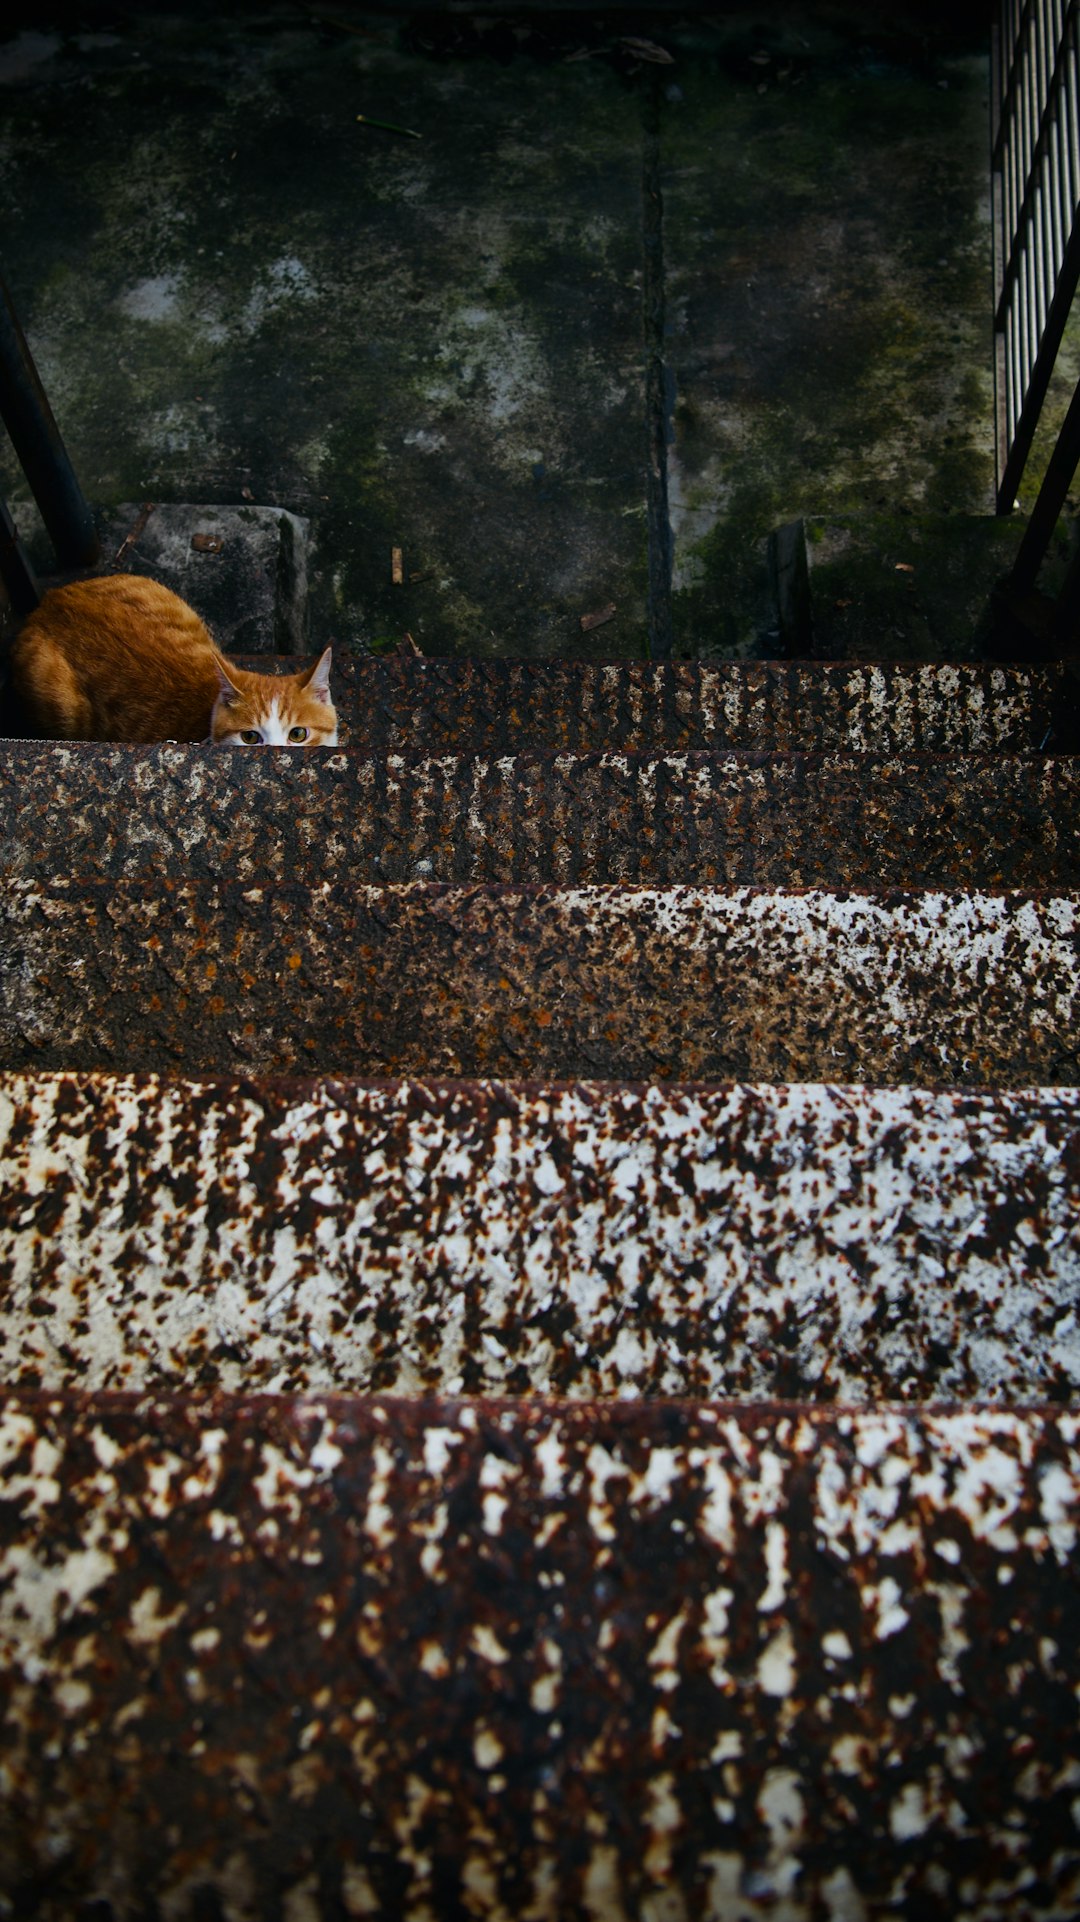 orange tabby cat on the window